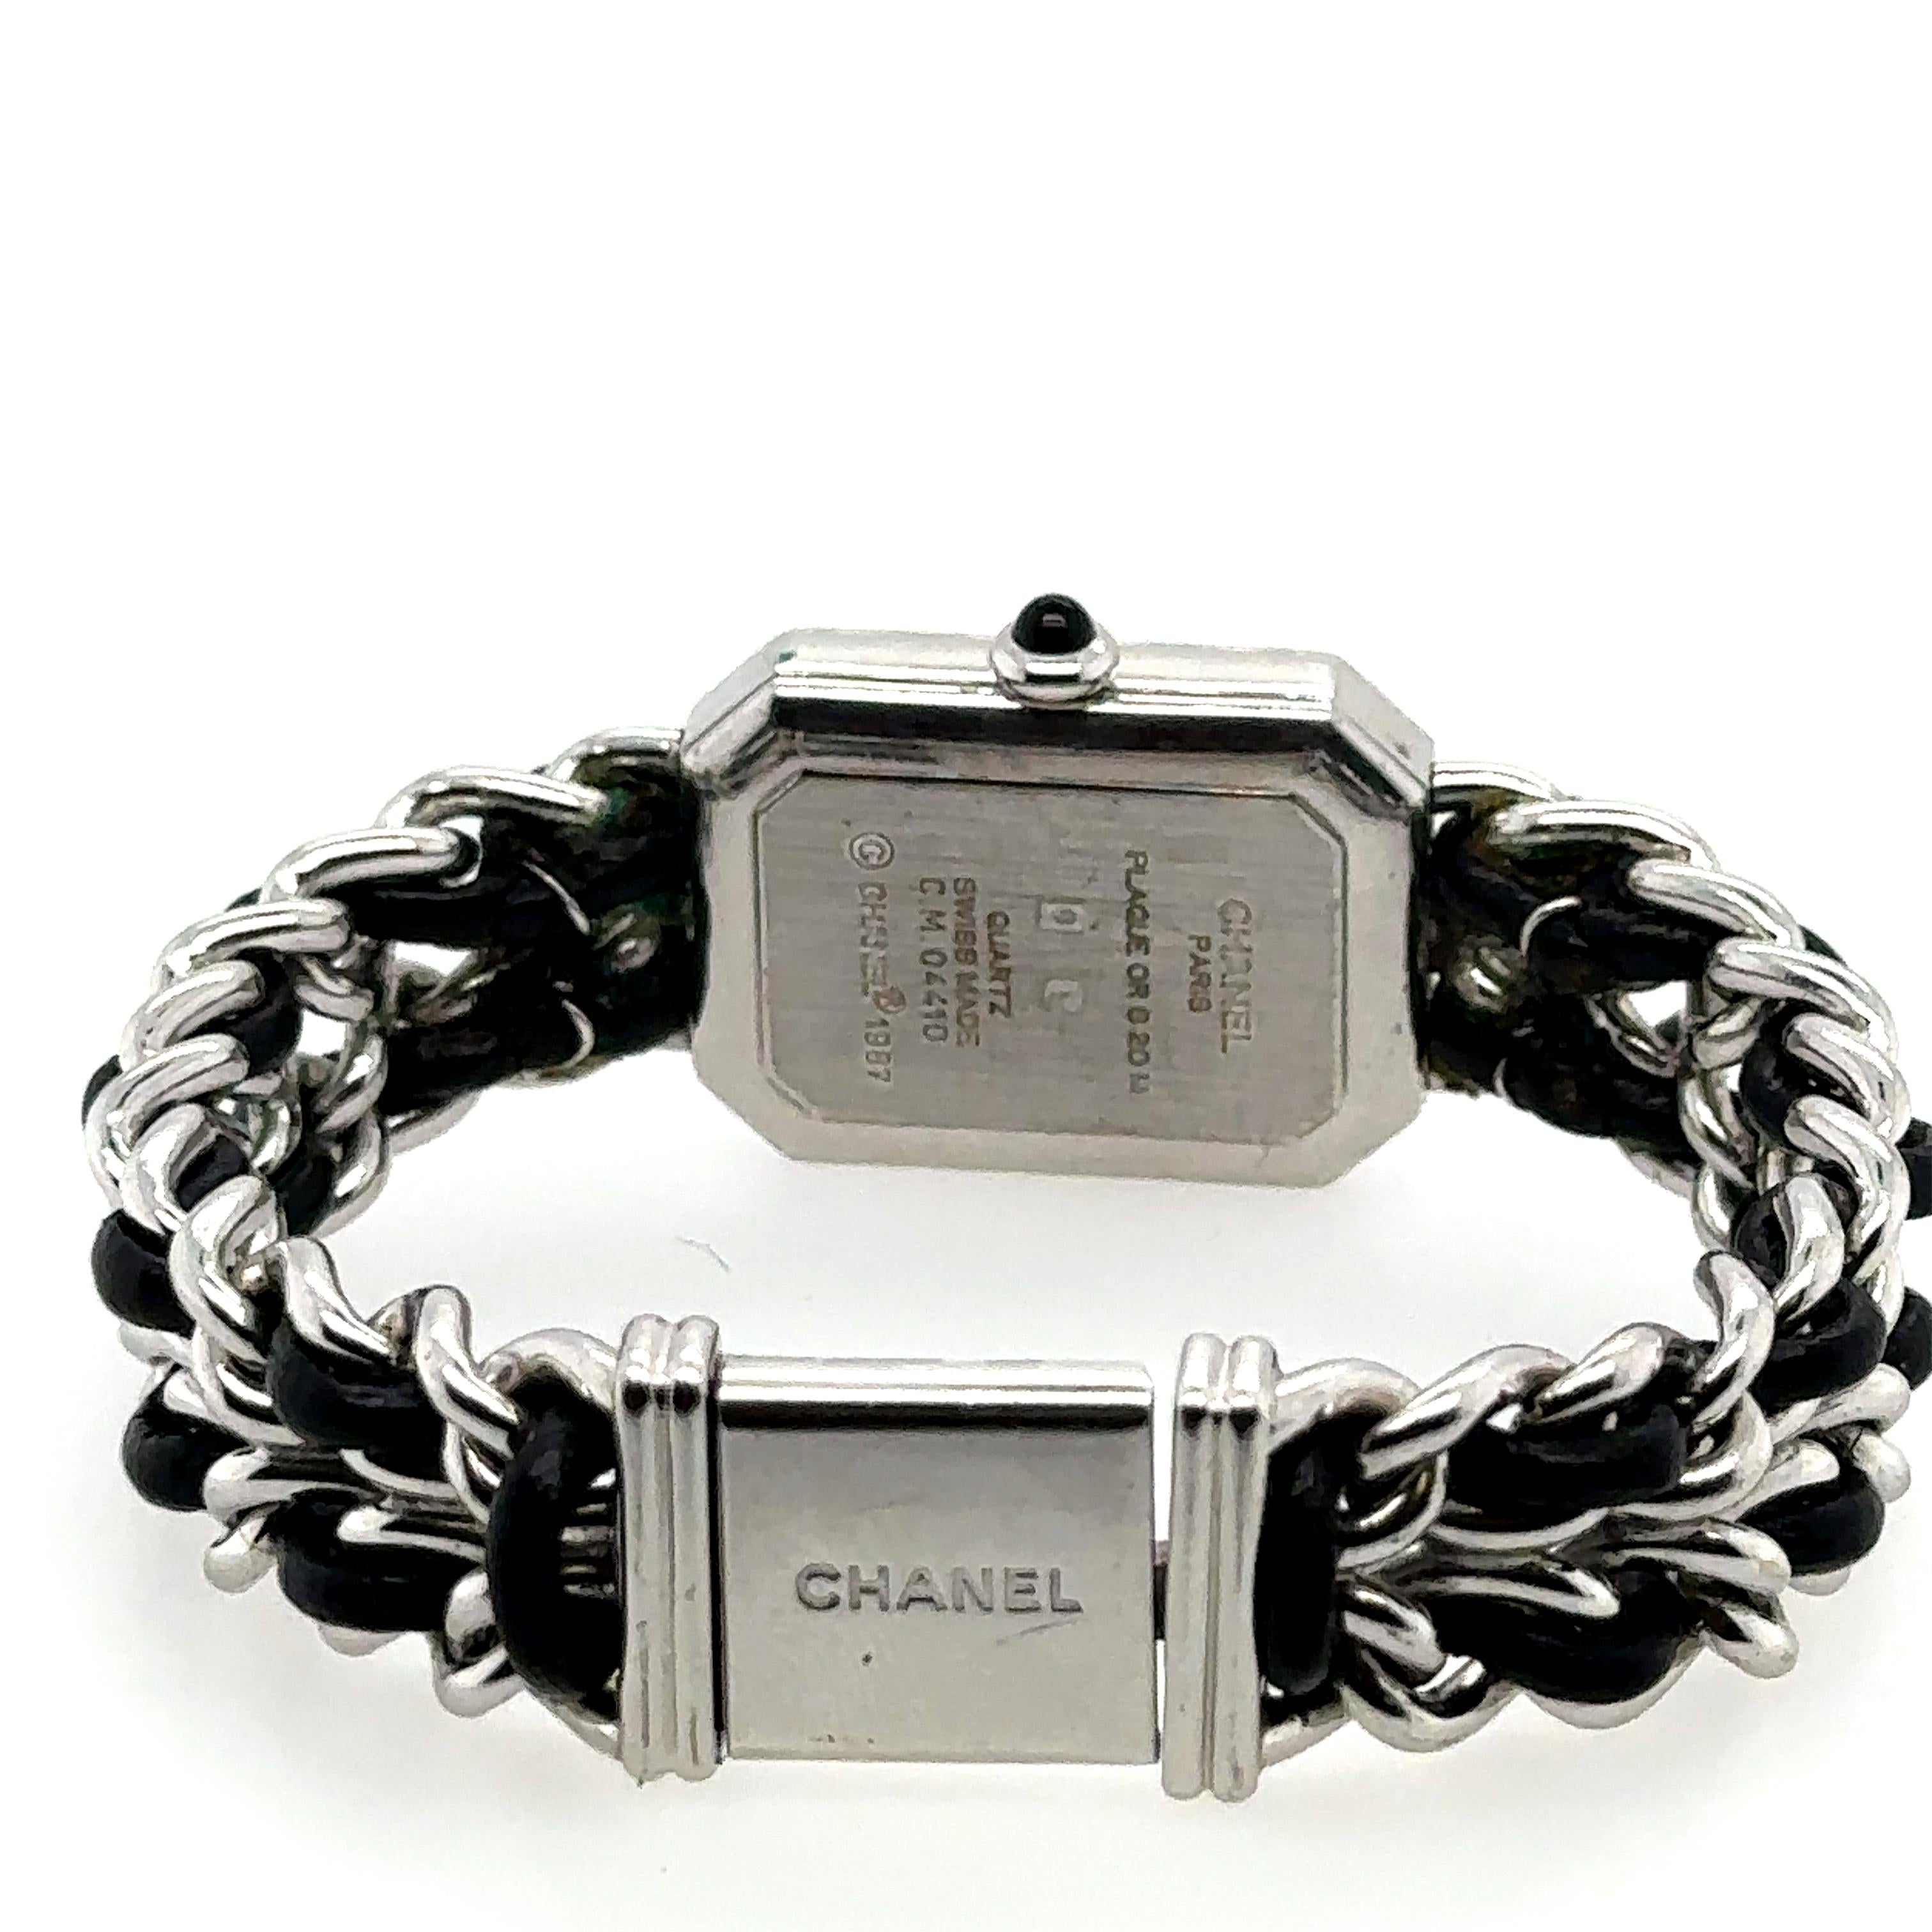 Chanel Premiere Steel Ladies Watch ref  H0451 For Sale 1